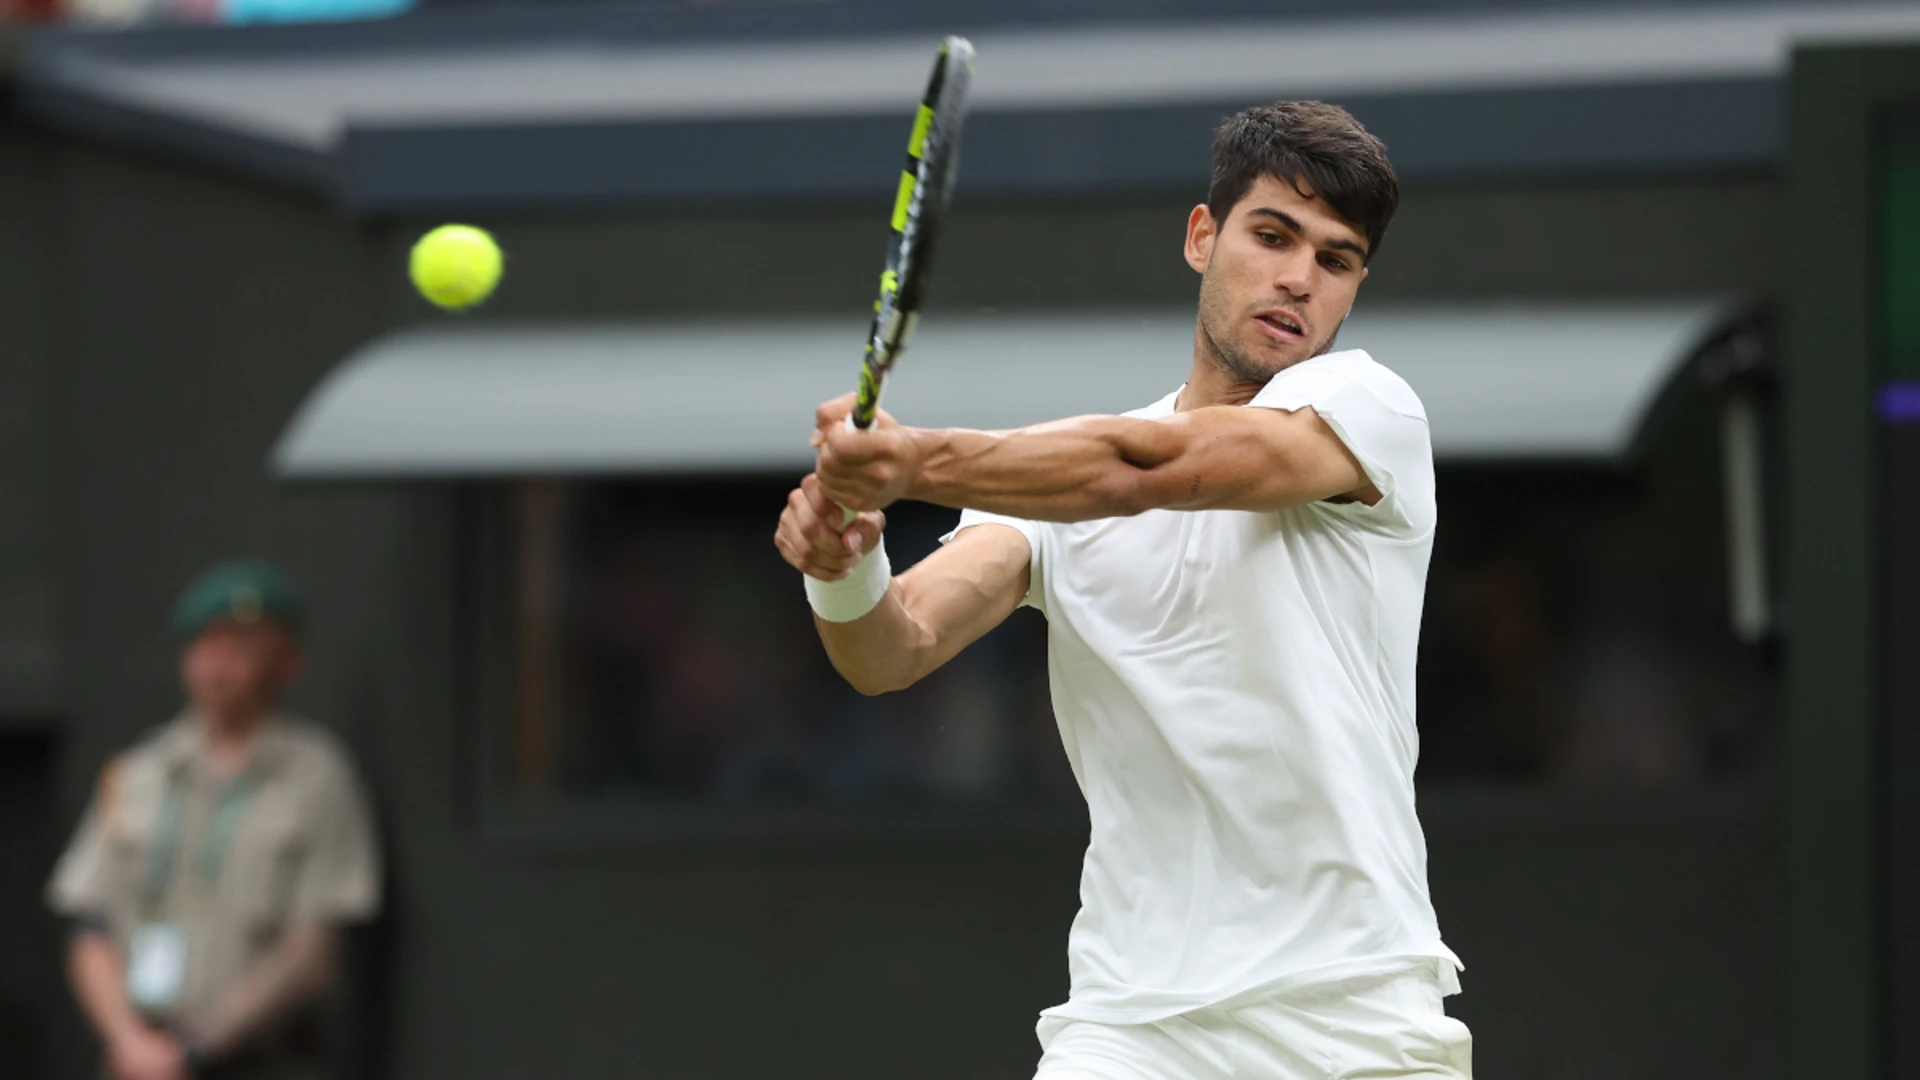 Confident Alcaraz faces aggressive Humbert in Wimbledon's fourth round